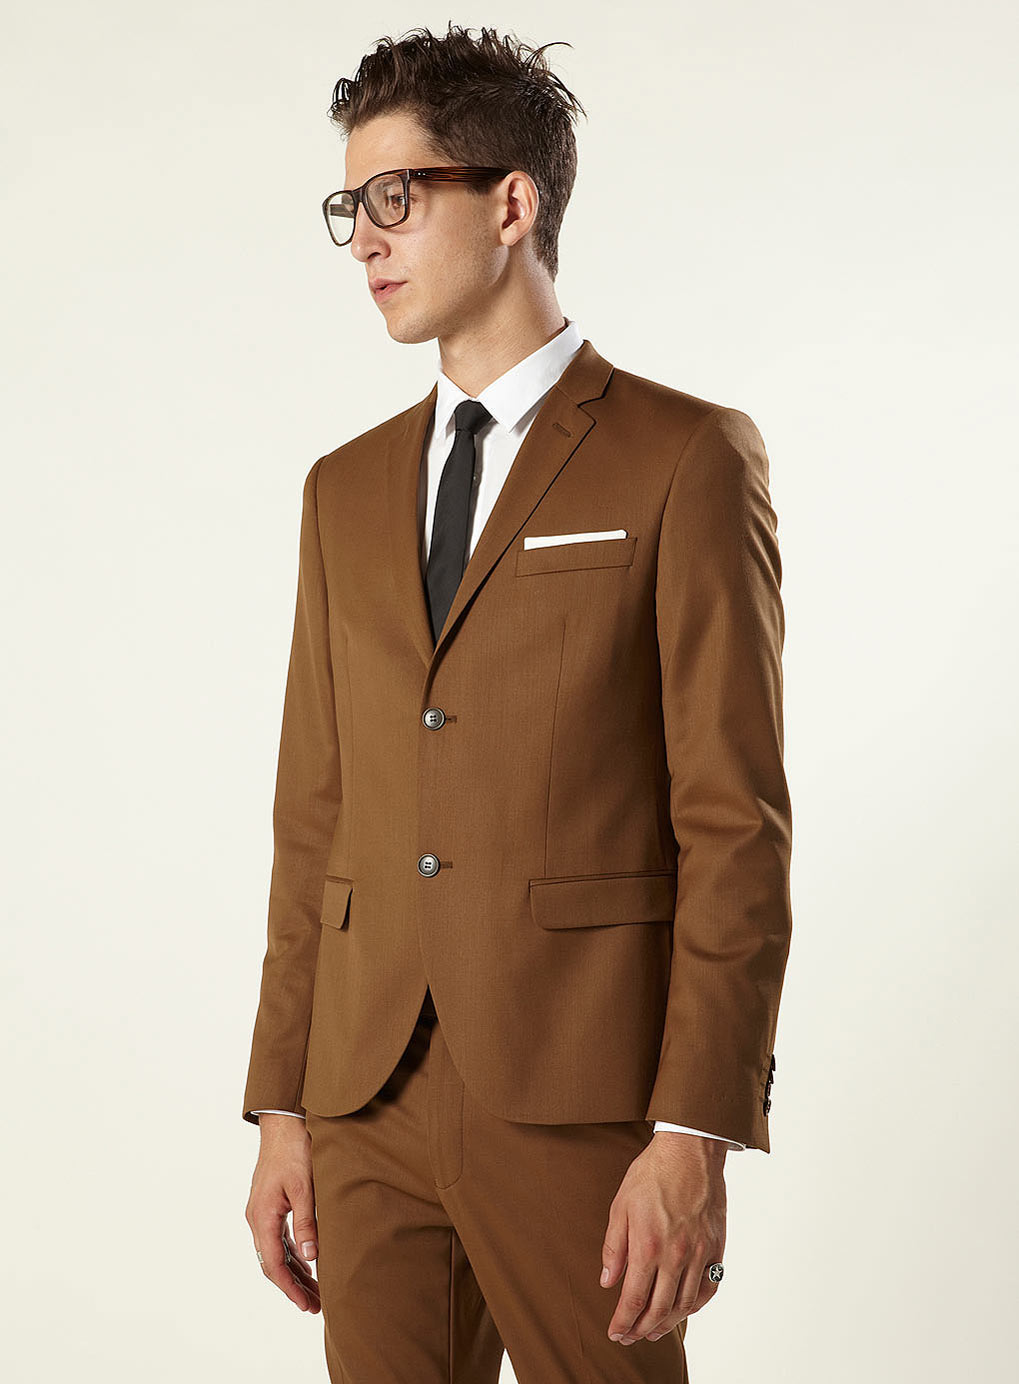 Fudge Brown Skinny Suit | Fashion Groom